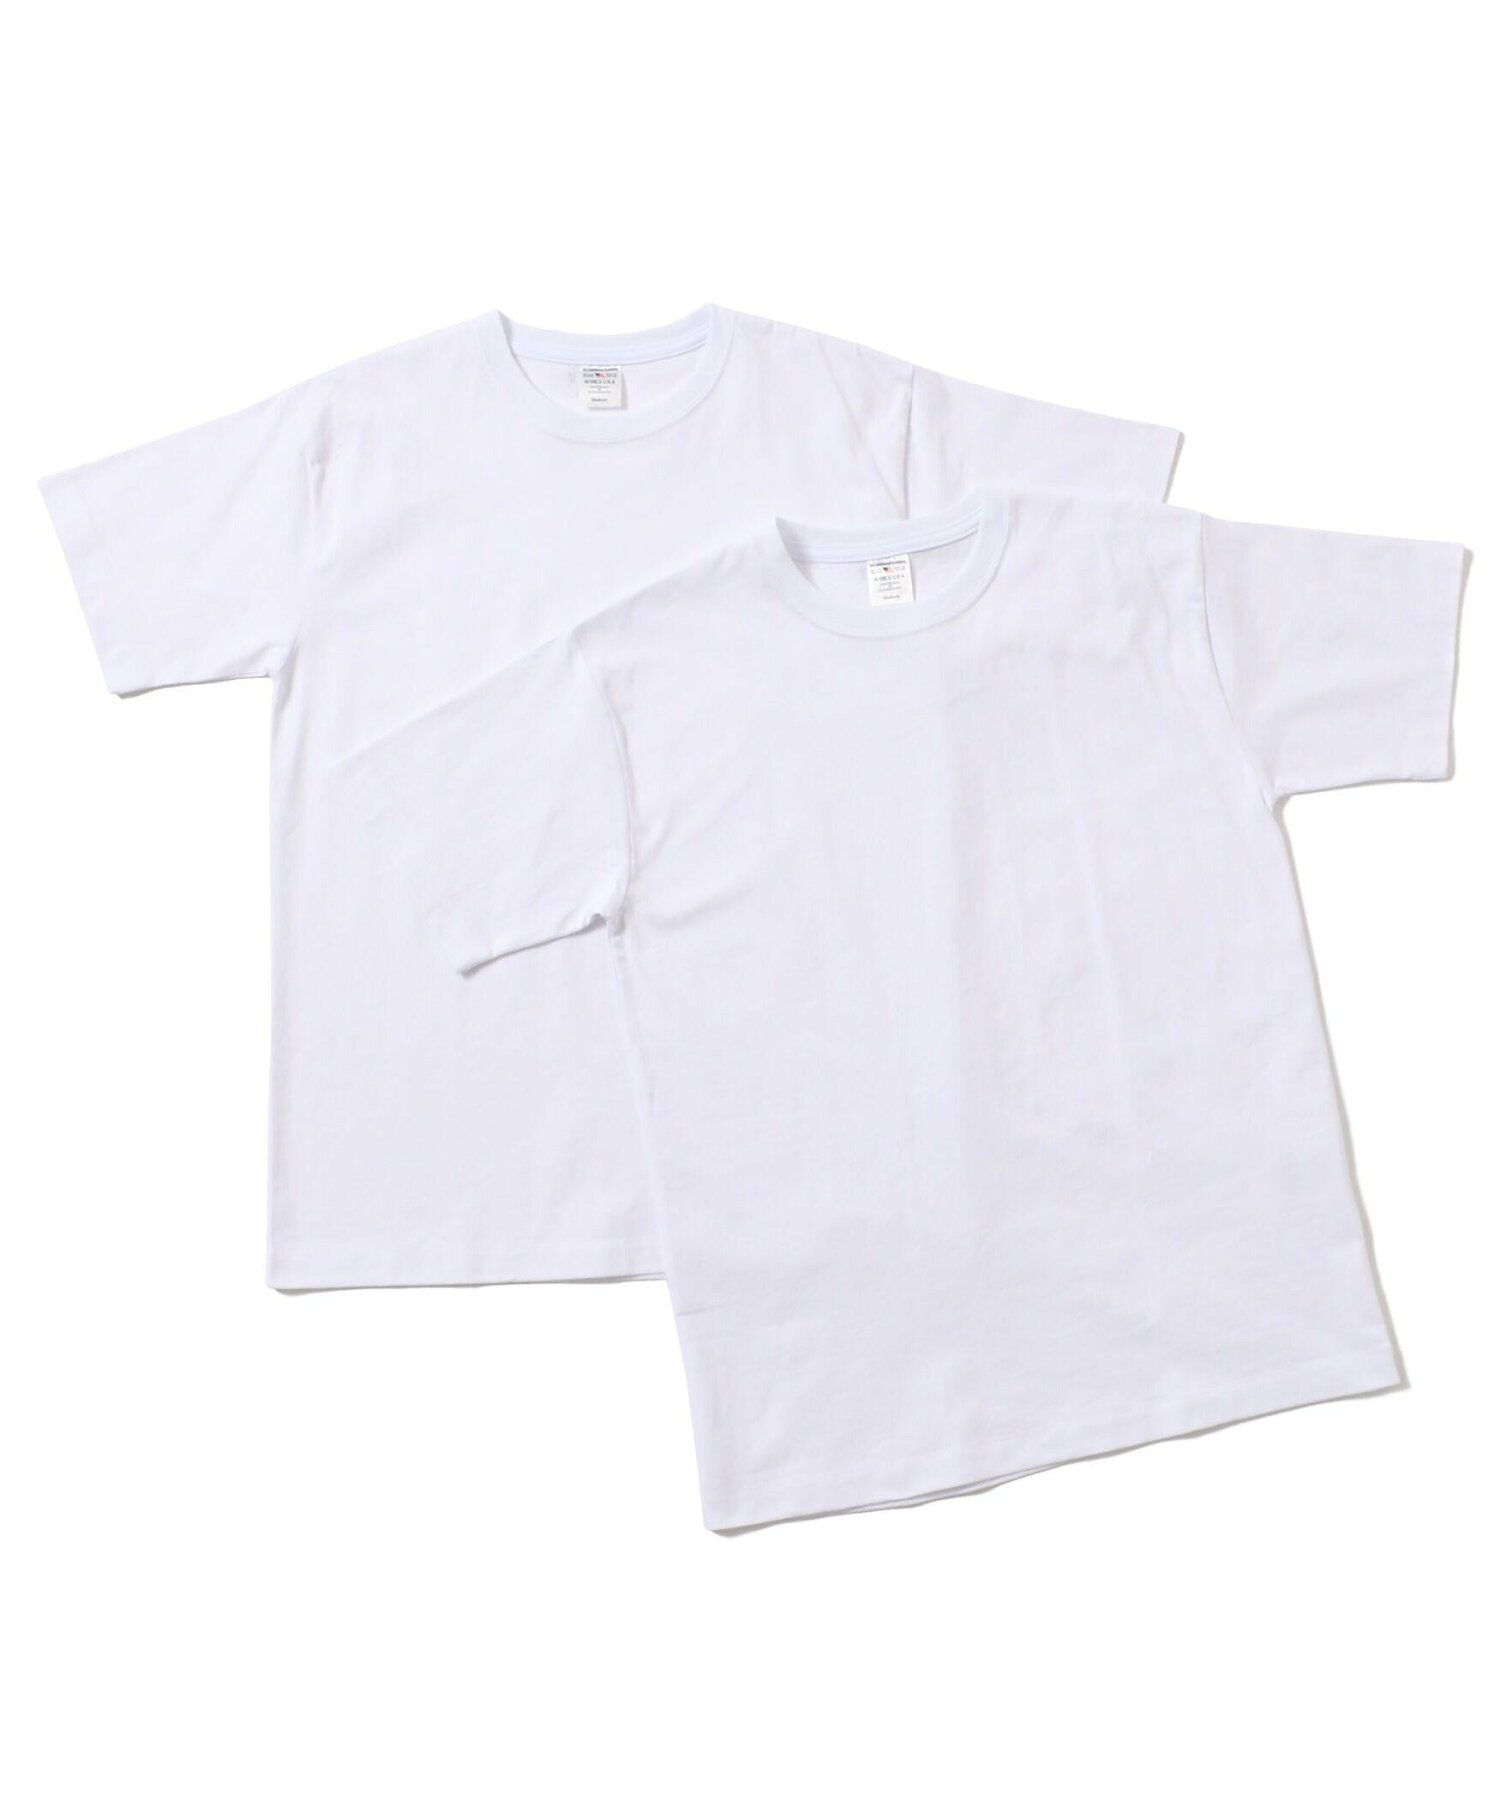 《DAILY/デイリー》DAILY 2-PACK CREW NECK TEE/デイリー2パック 半袖クルーネックTシャツ